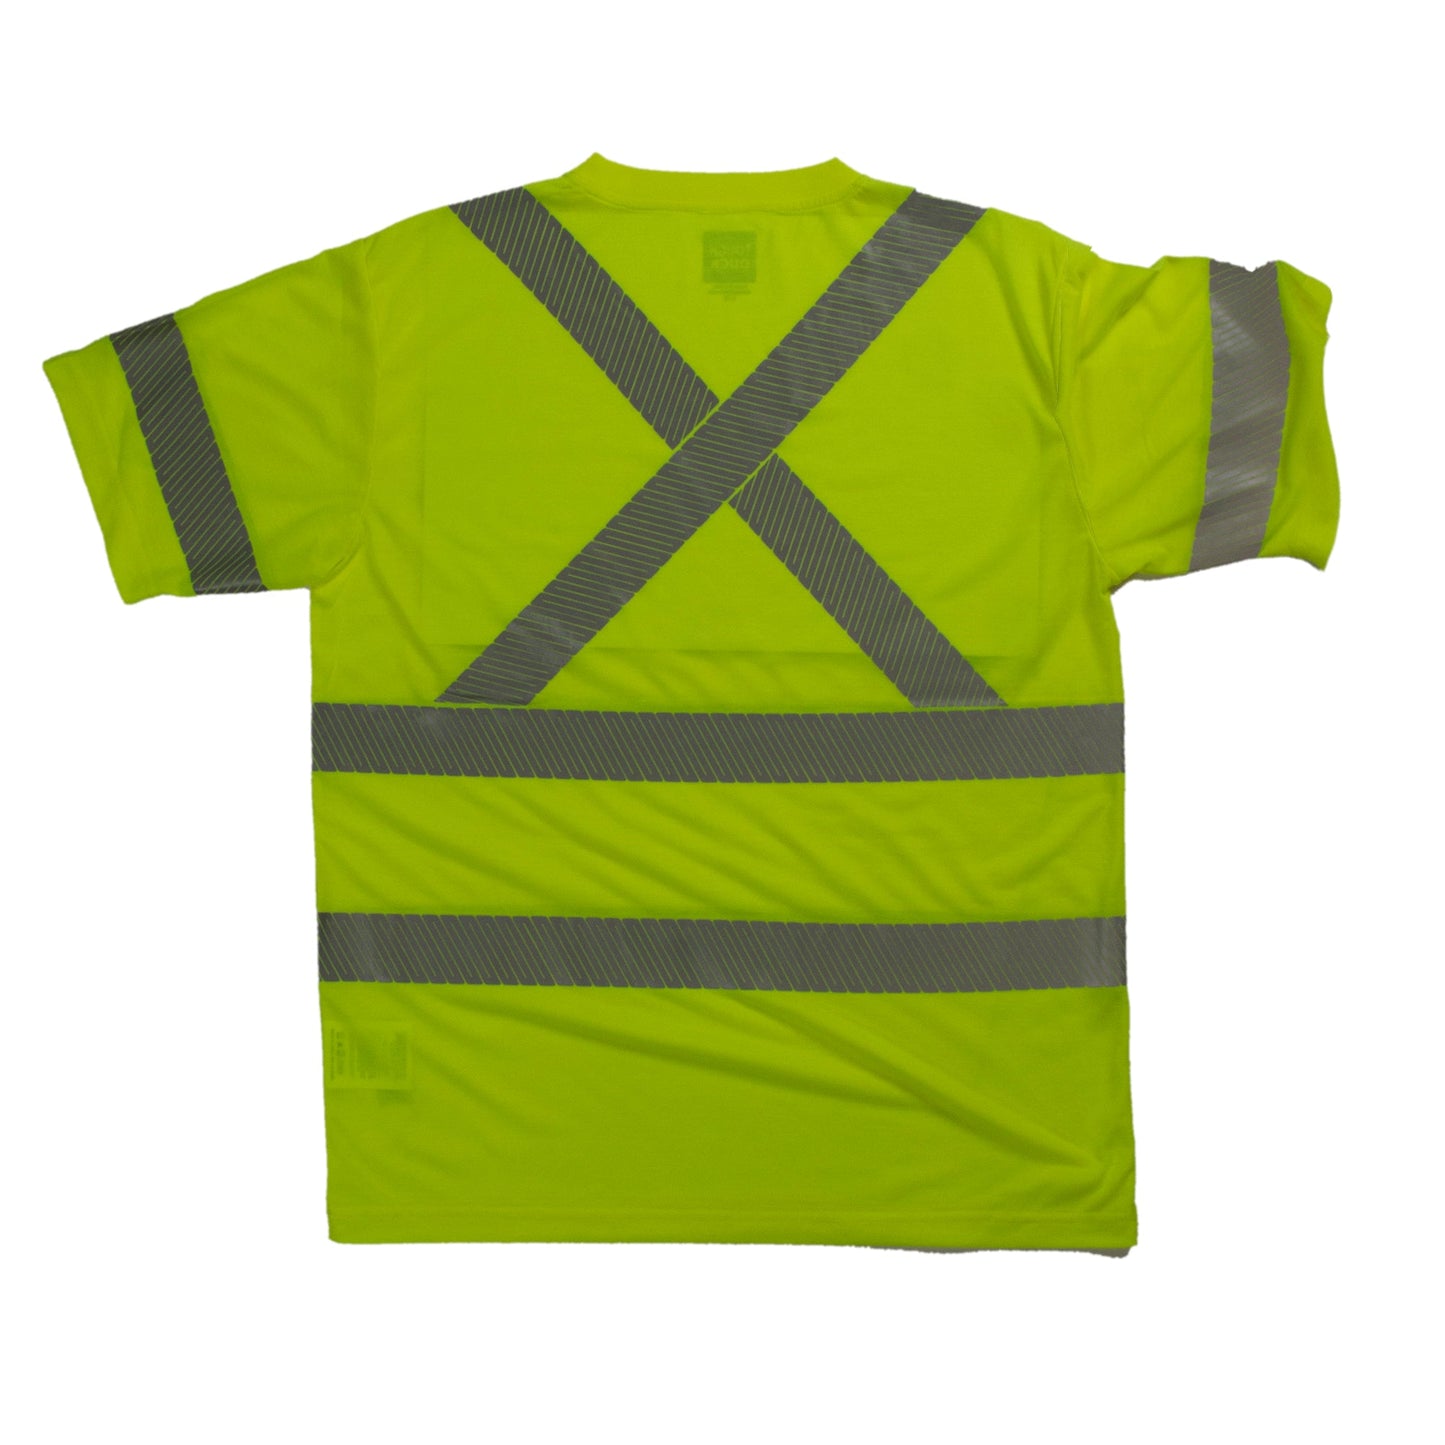 ST12 Shortsleeve Safety T-Shirt